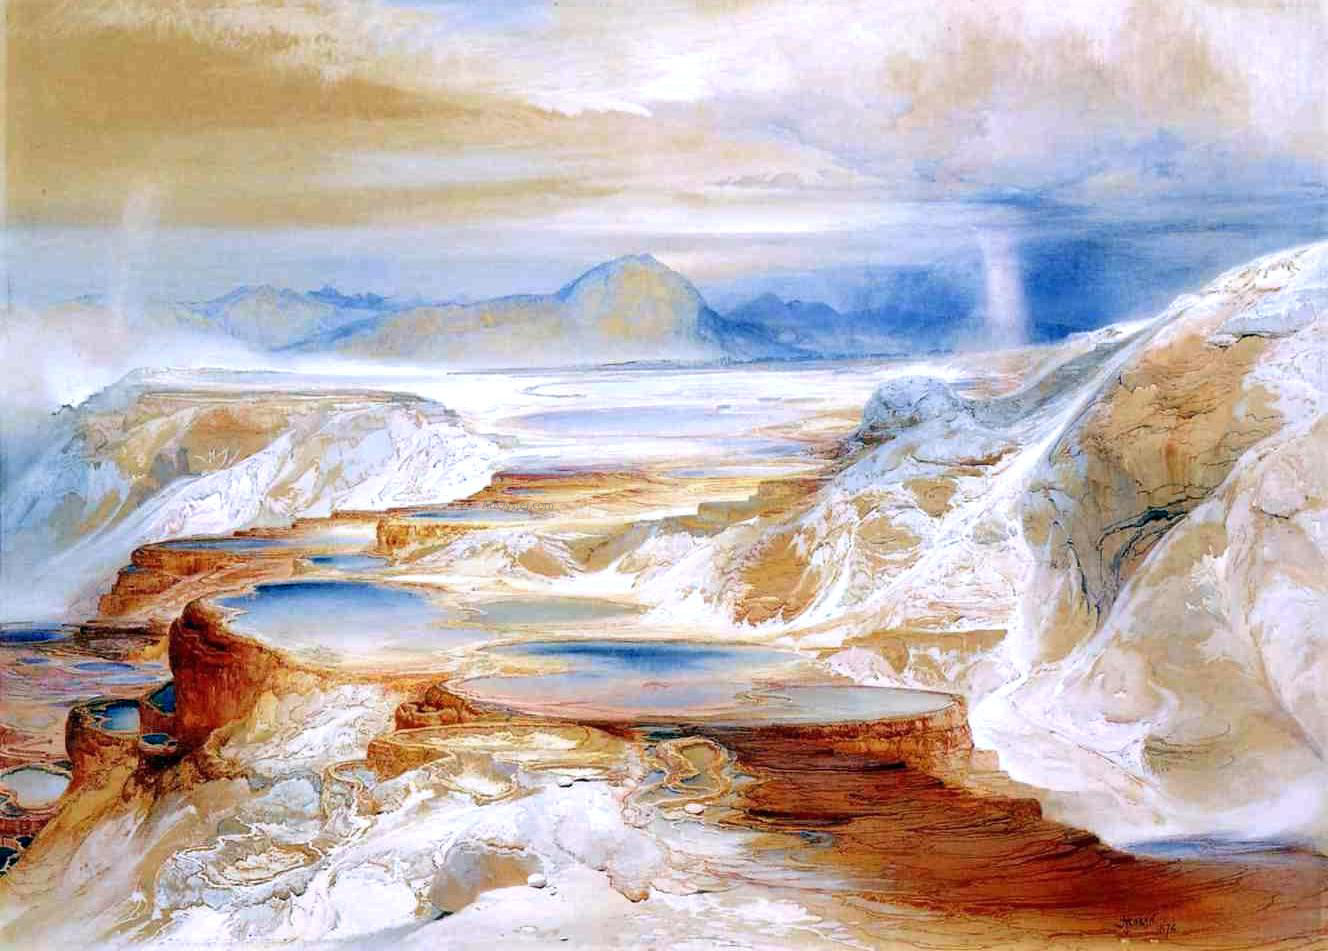  Thomas Moran Hot Springs at Gardiners River - Hand Painted Oil Painting